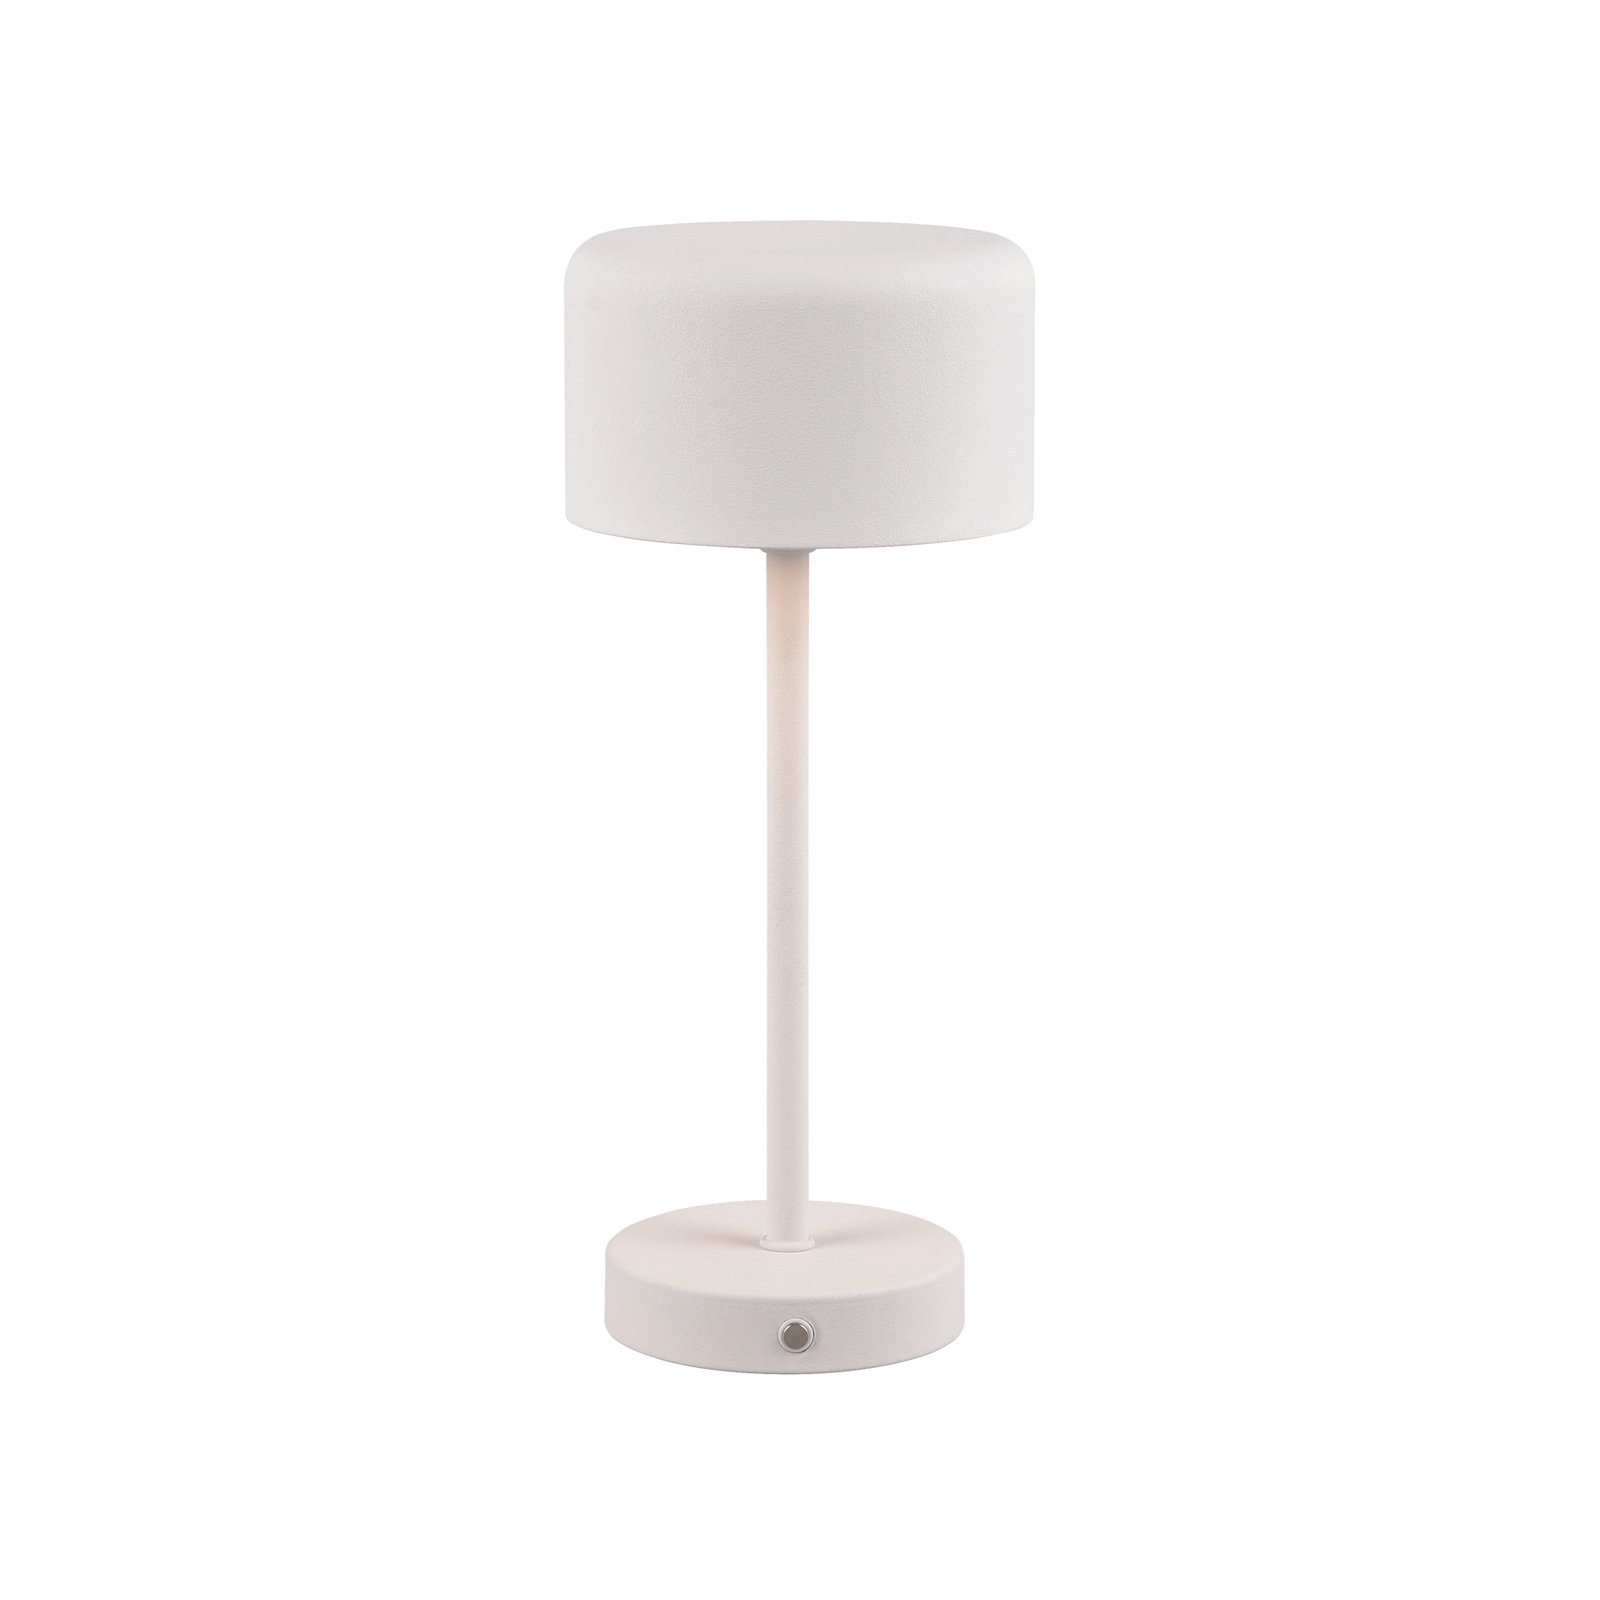 Jeff LED tafellamp, mat wit, hoogte 30 cm, metaal